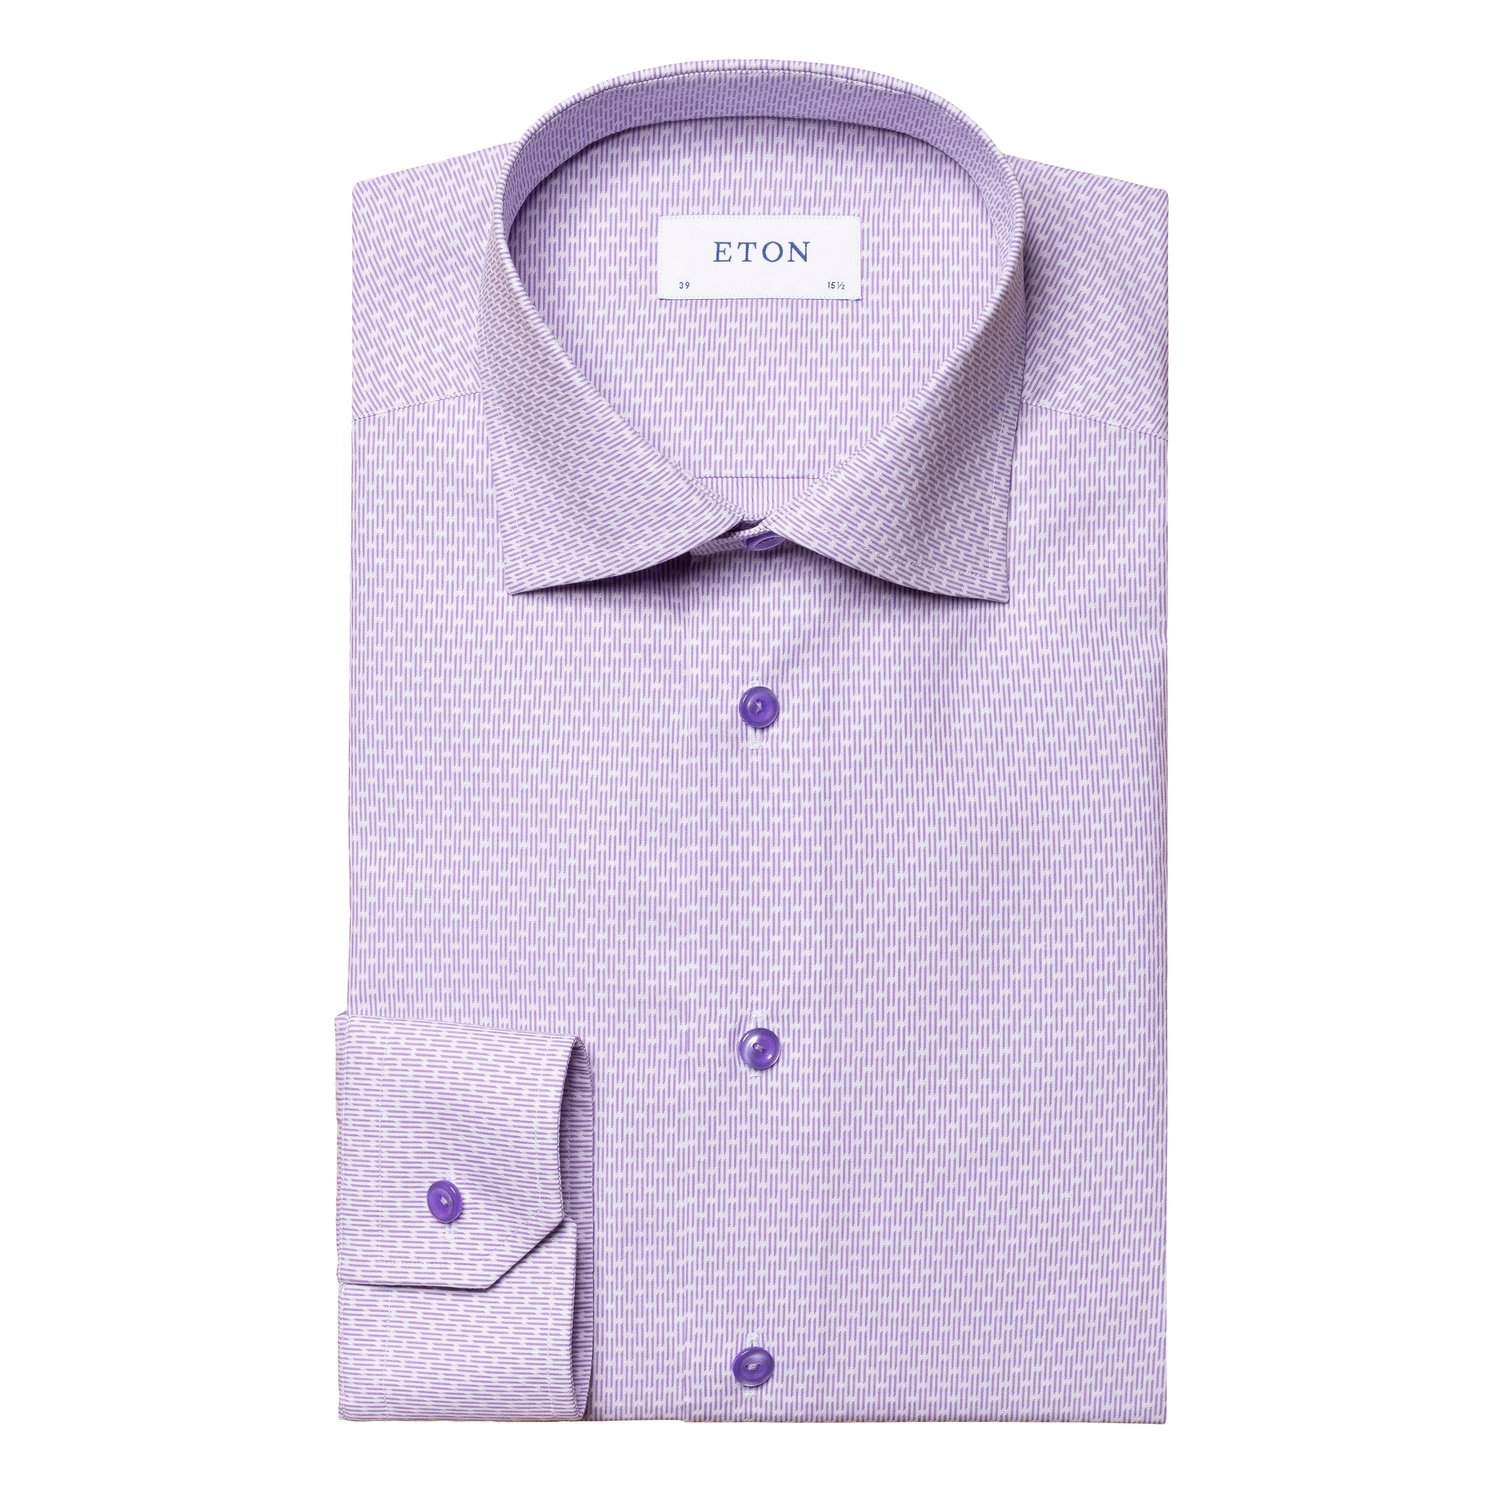 Eton Contemporary Fit, Twill Dress Shirt in Purple with Subtle Print — Uomo San Francisco | Luxury European Menswear